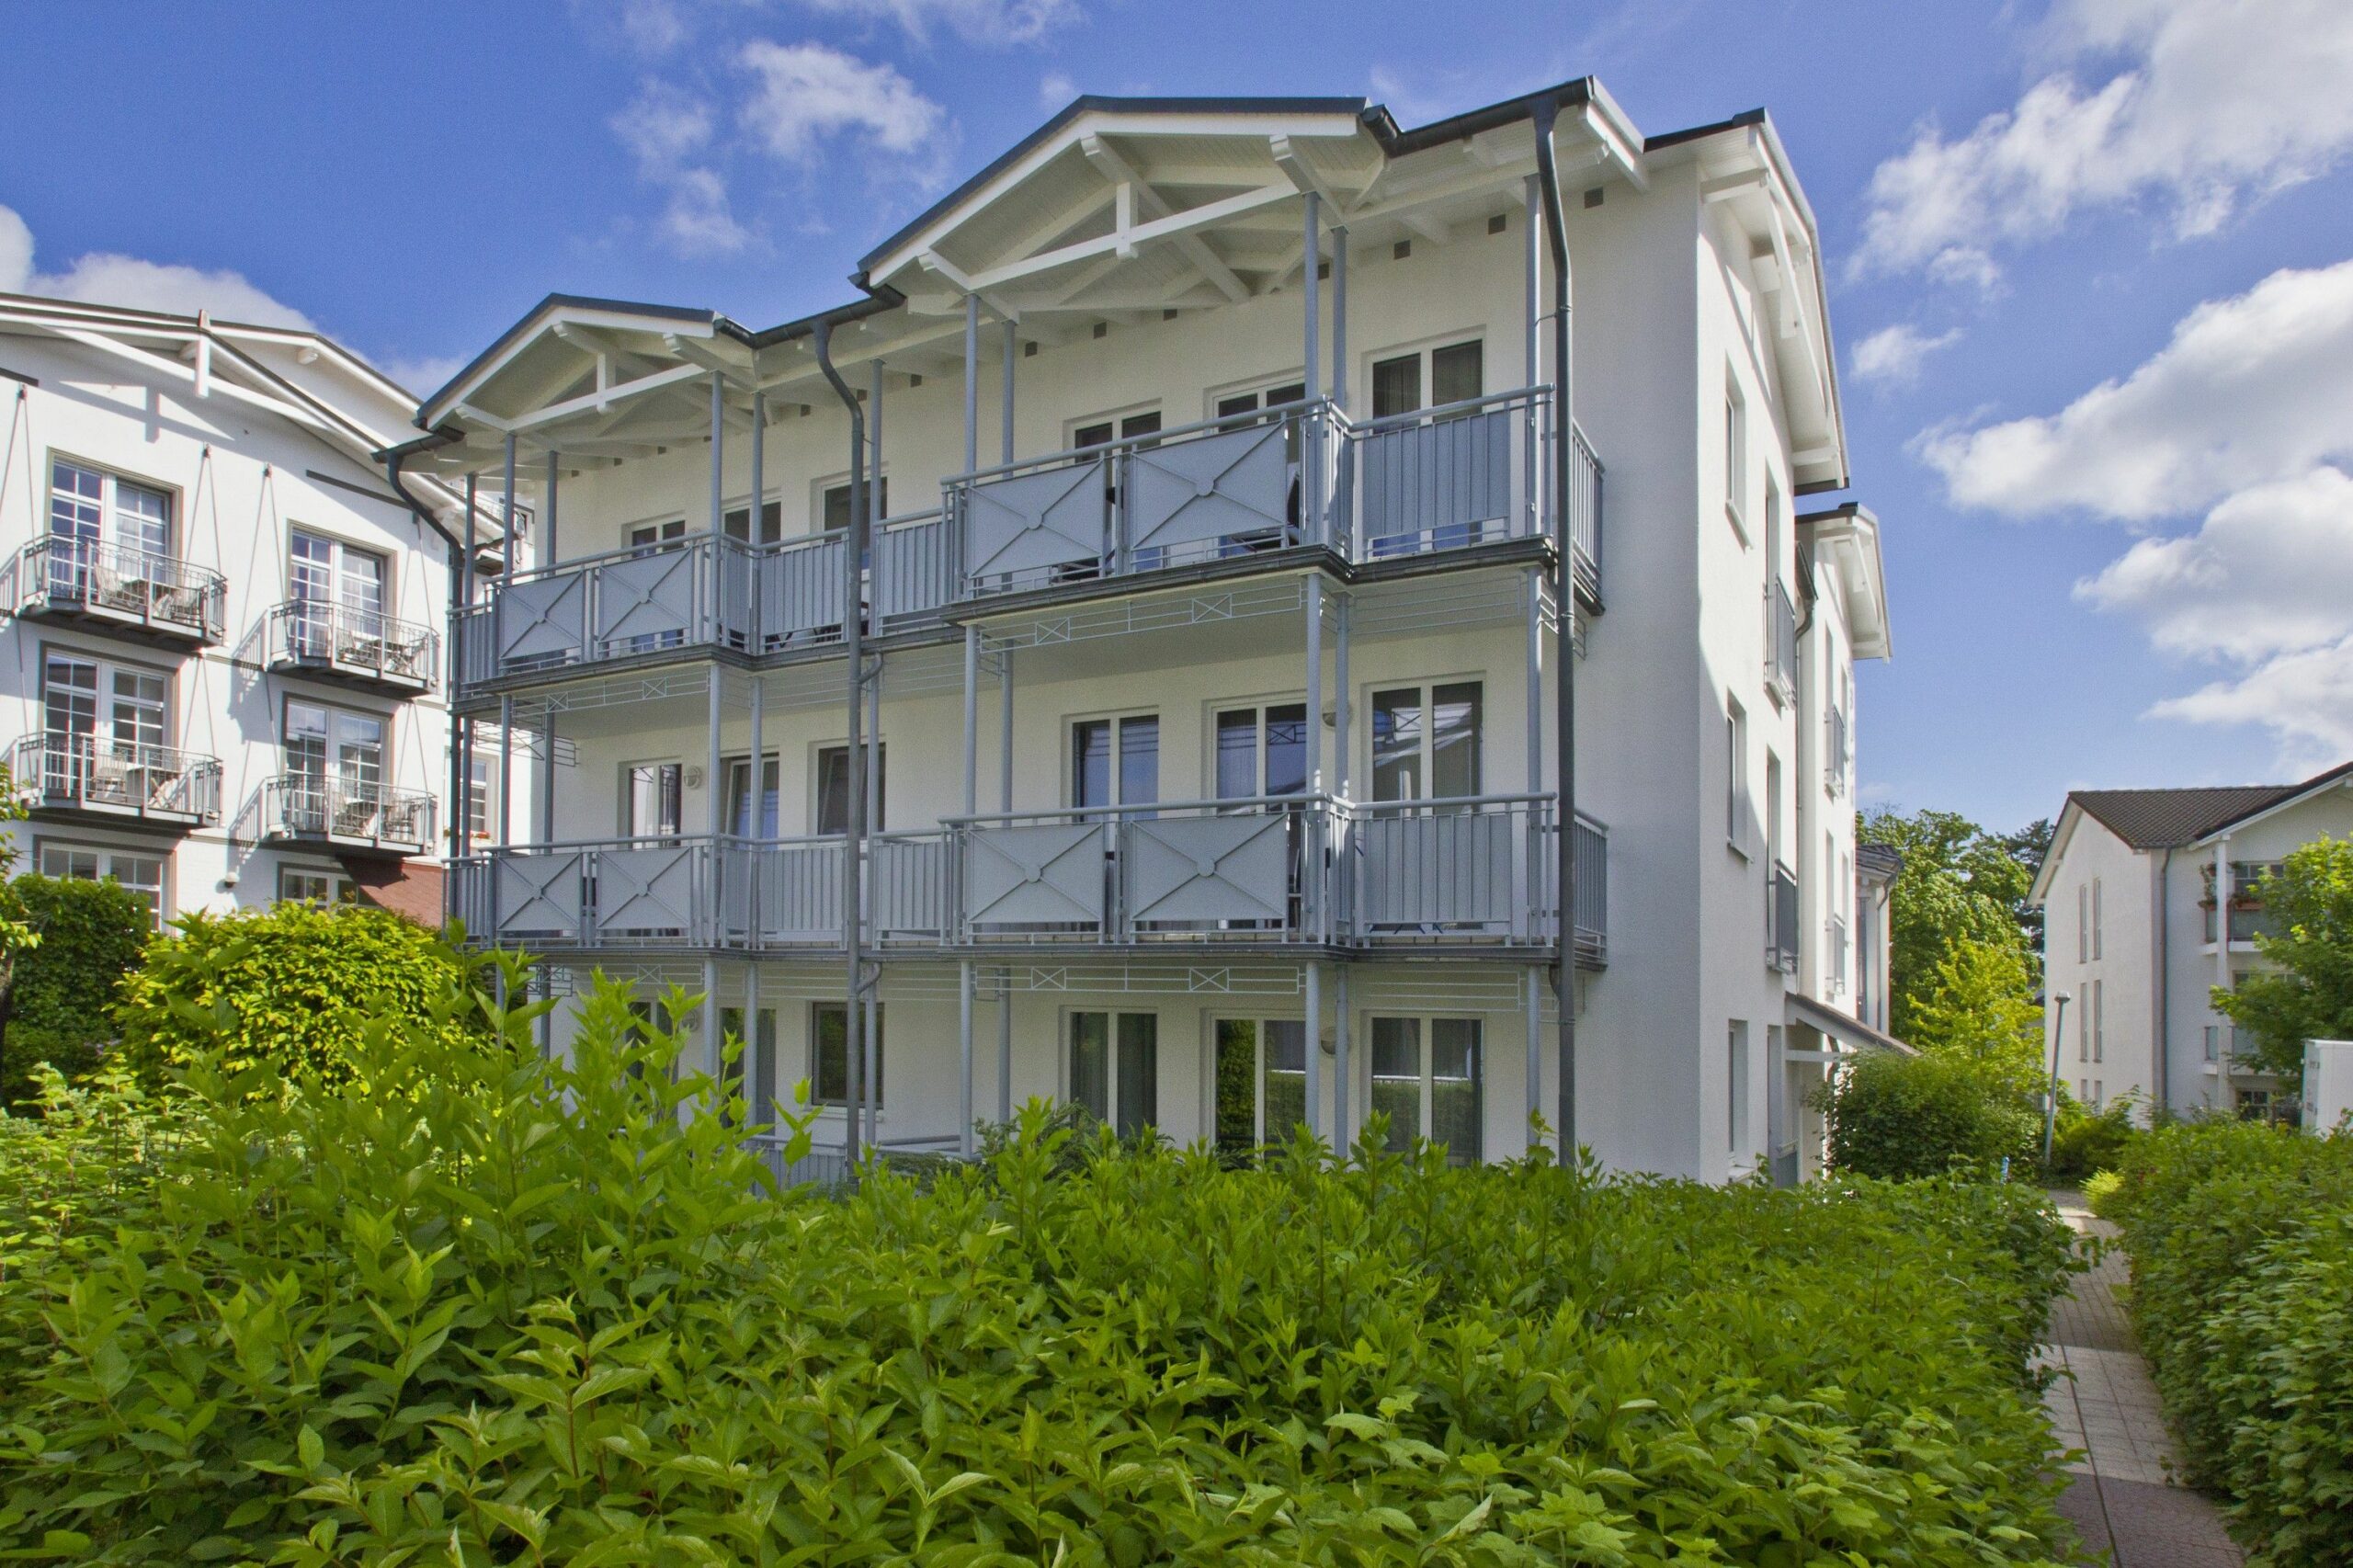 Villa Buskam in Göhren